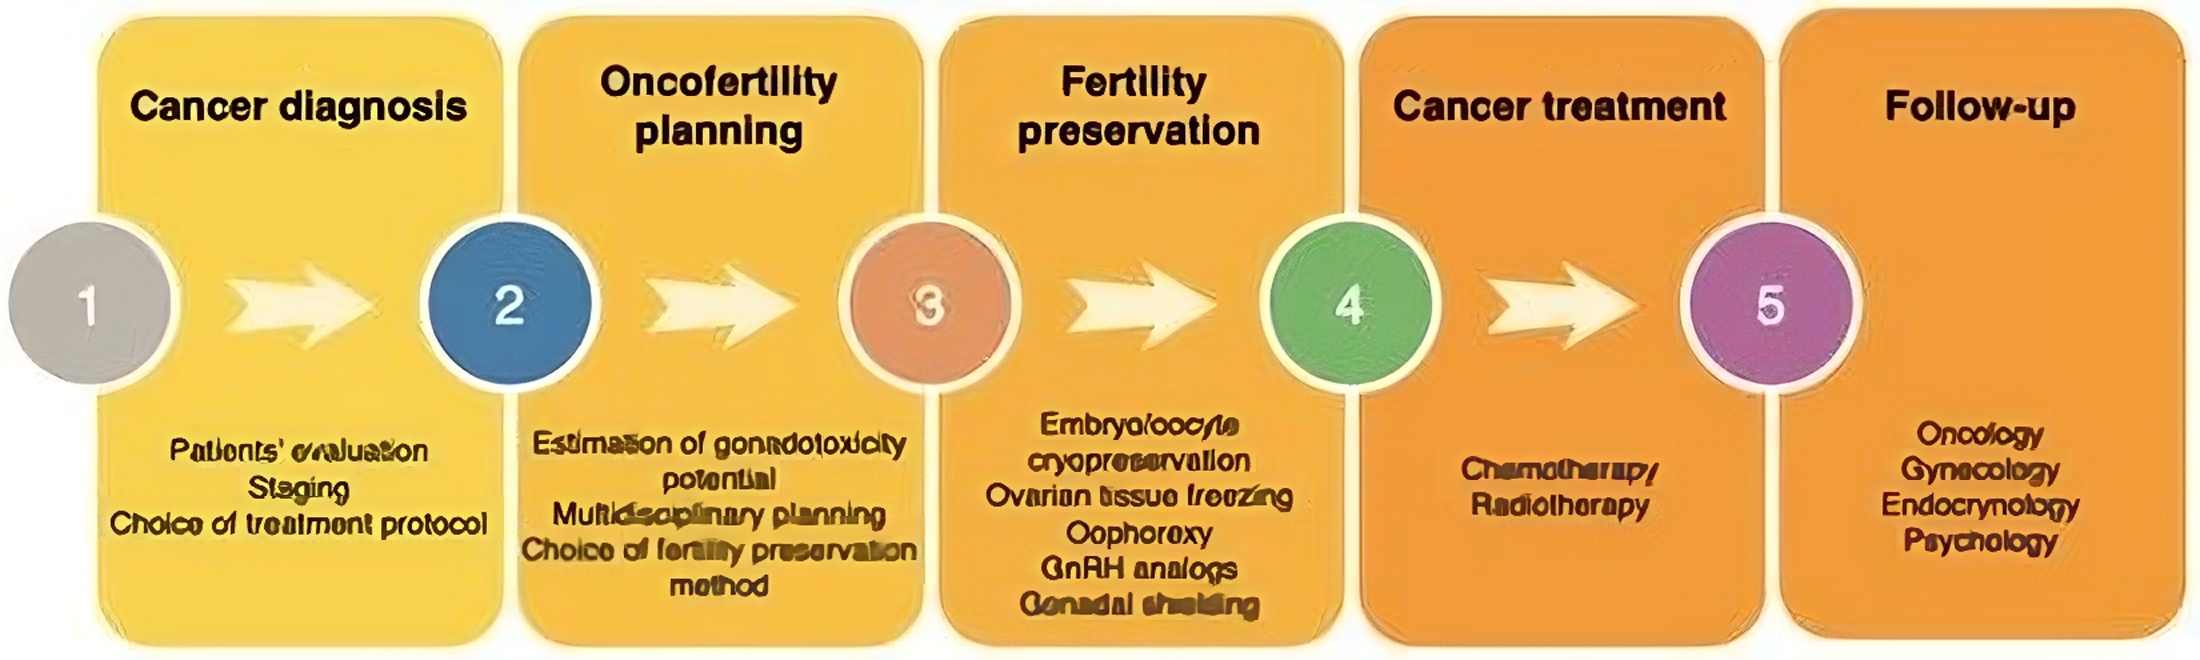 steps involved in fertility preservation transformed